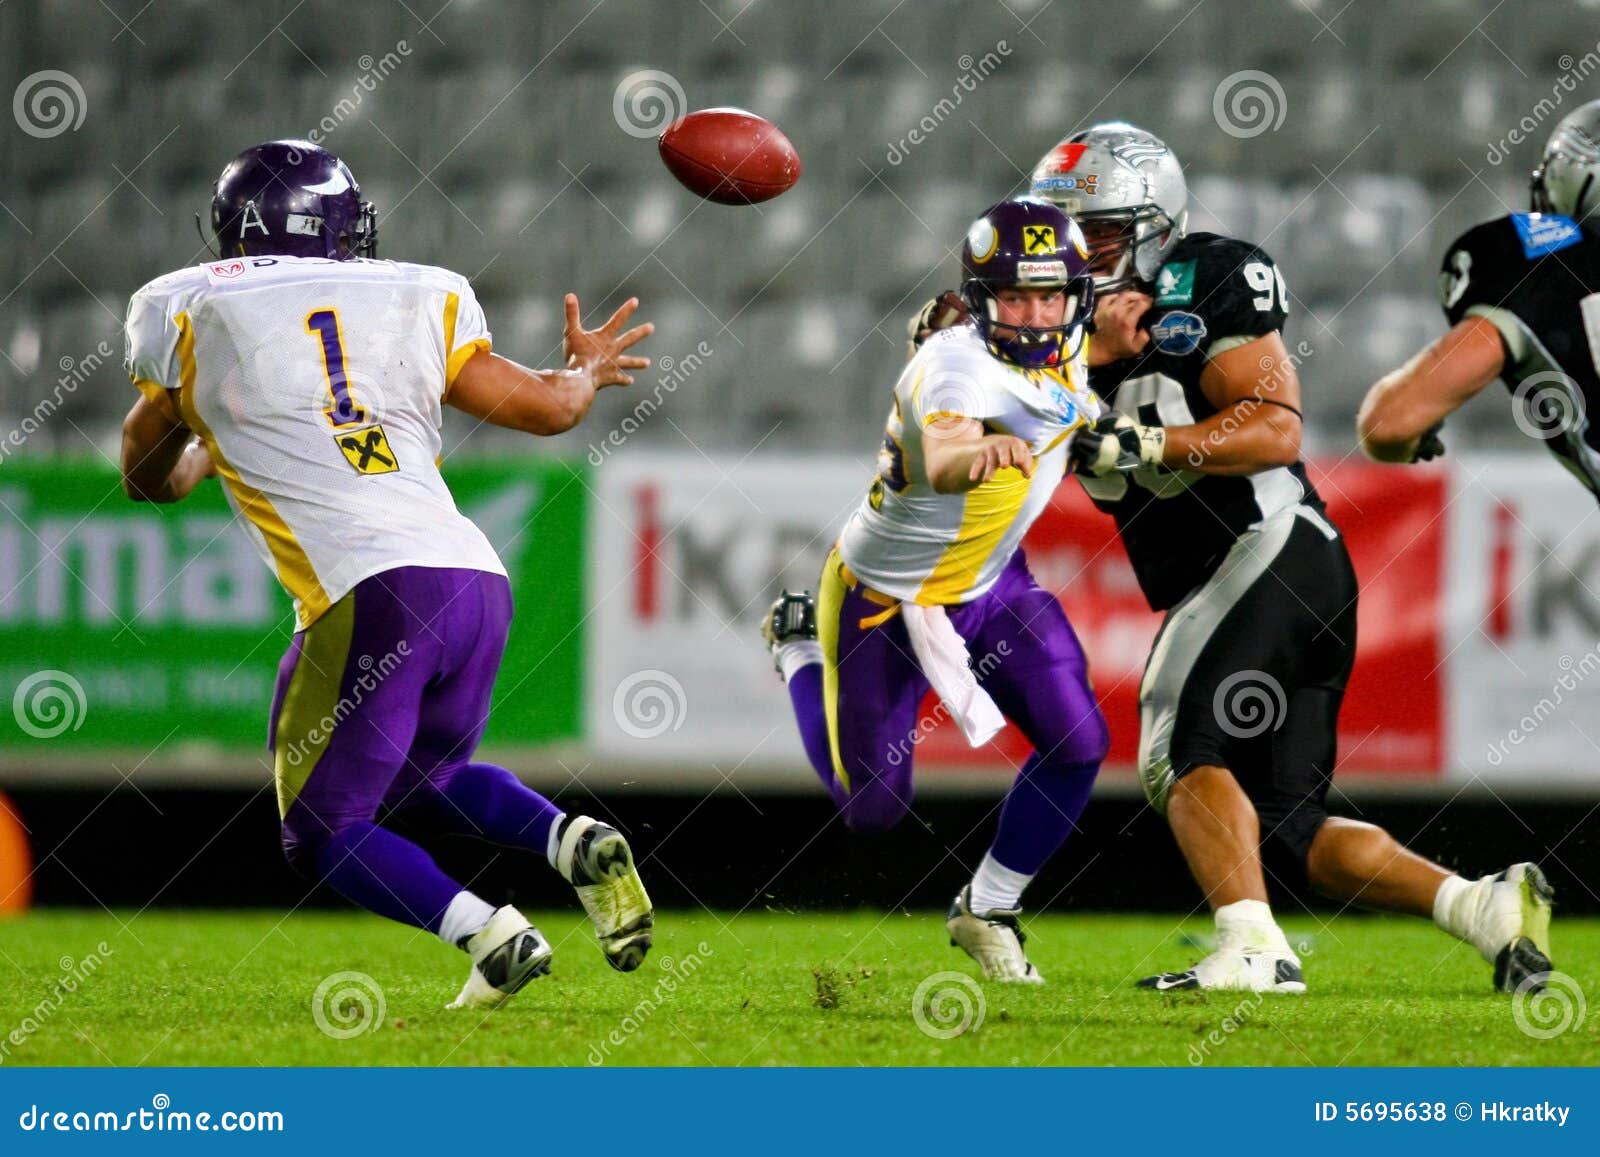 Raiders vs. Vikings editorial stock photo. Image of teamwork 5695638